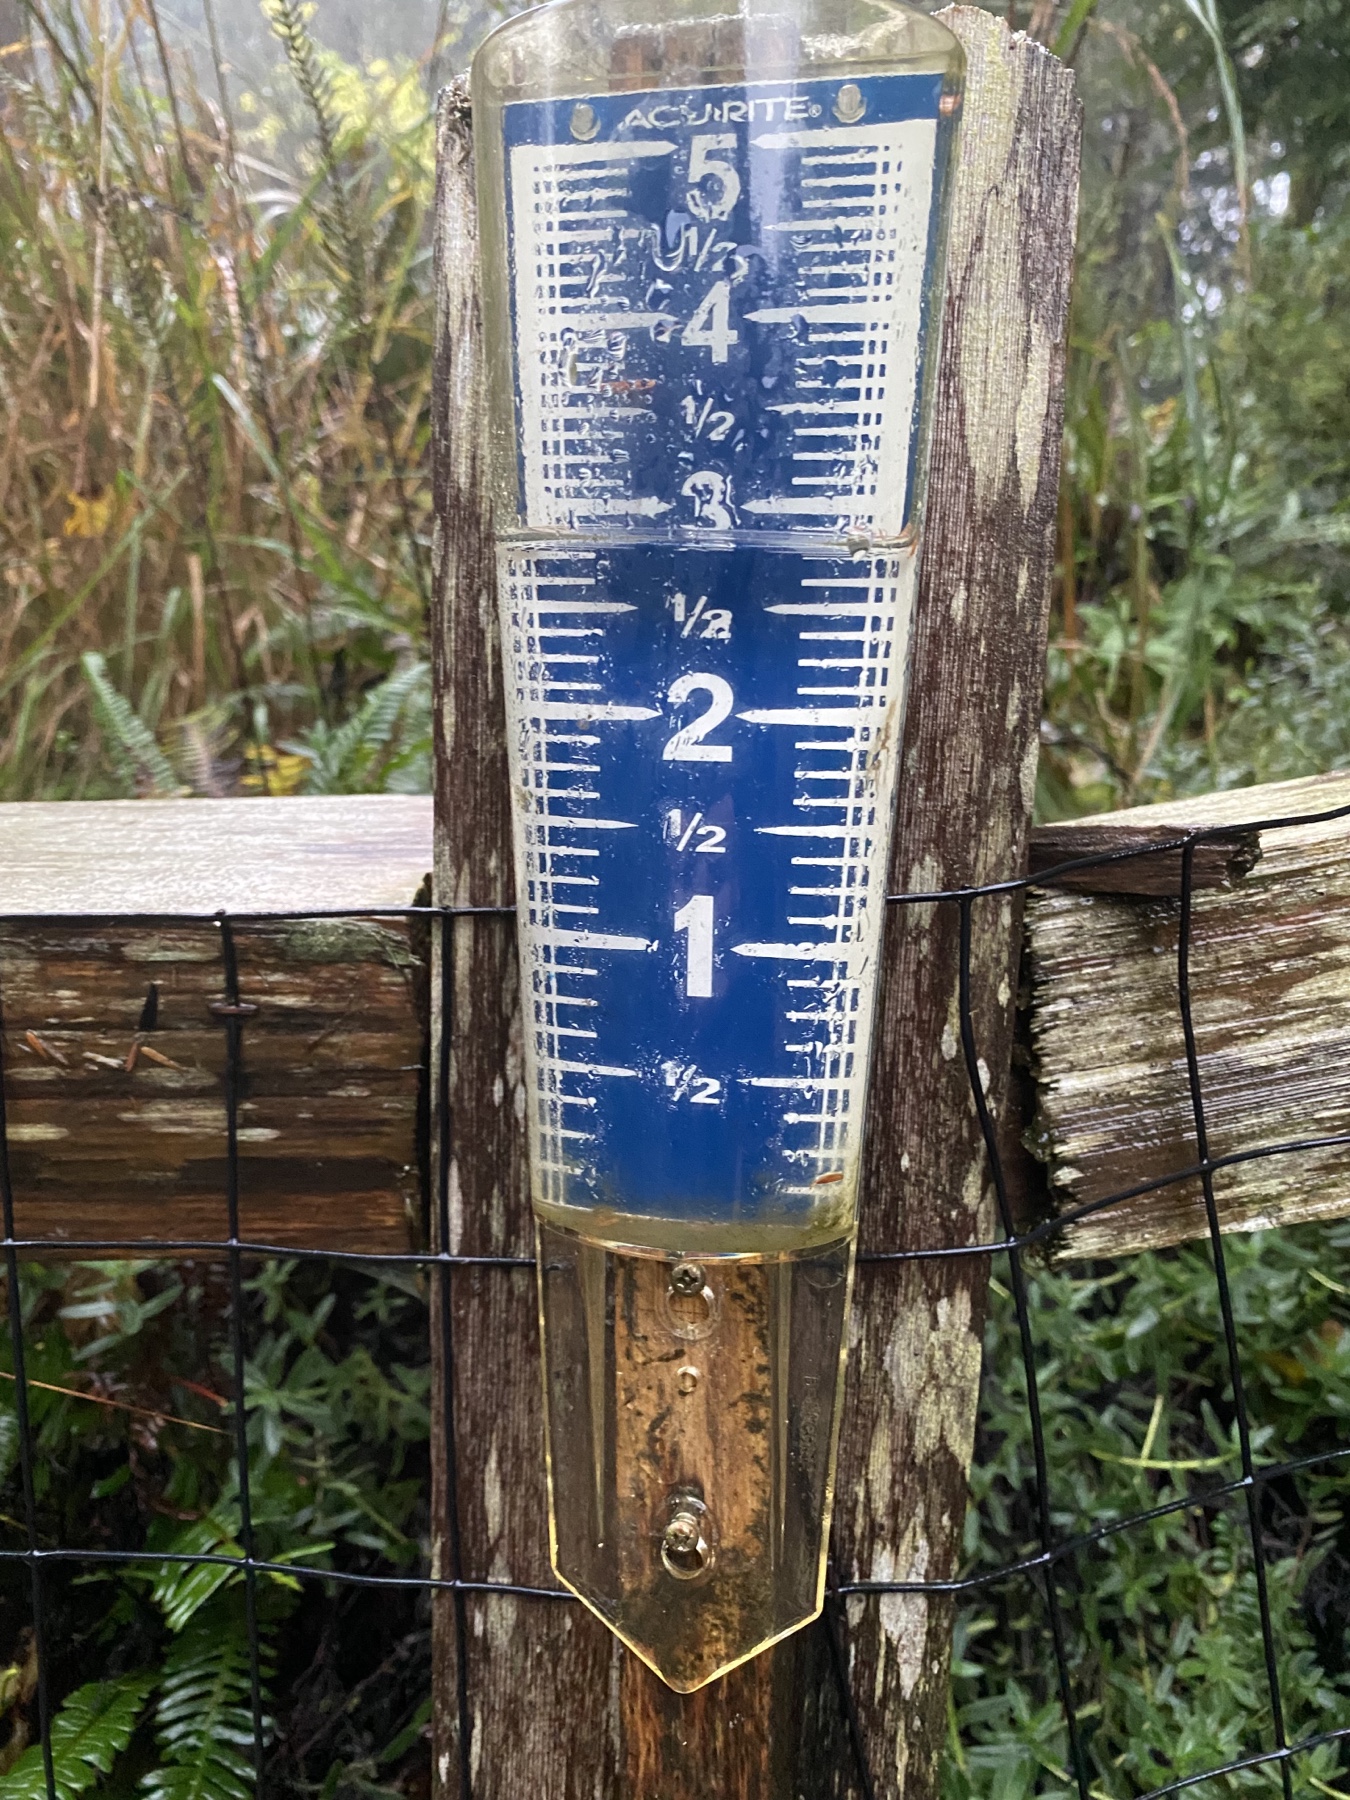 Rain gauge indicating 5+ inches of rain 